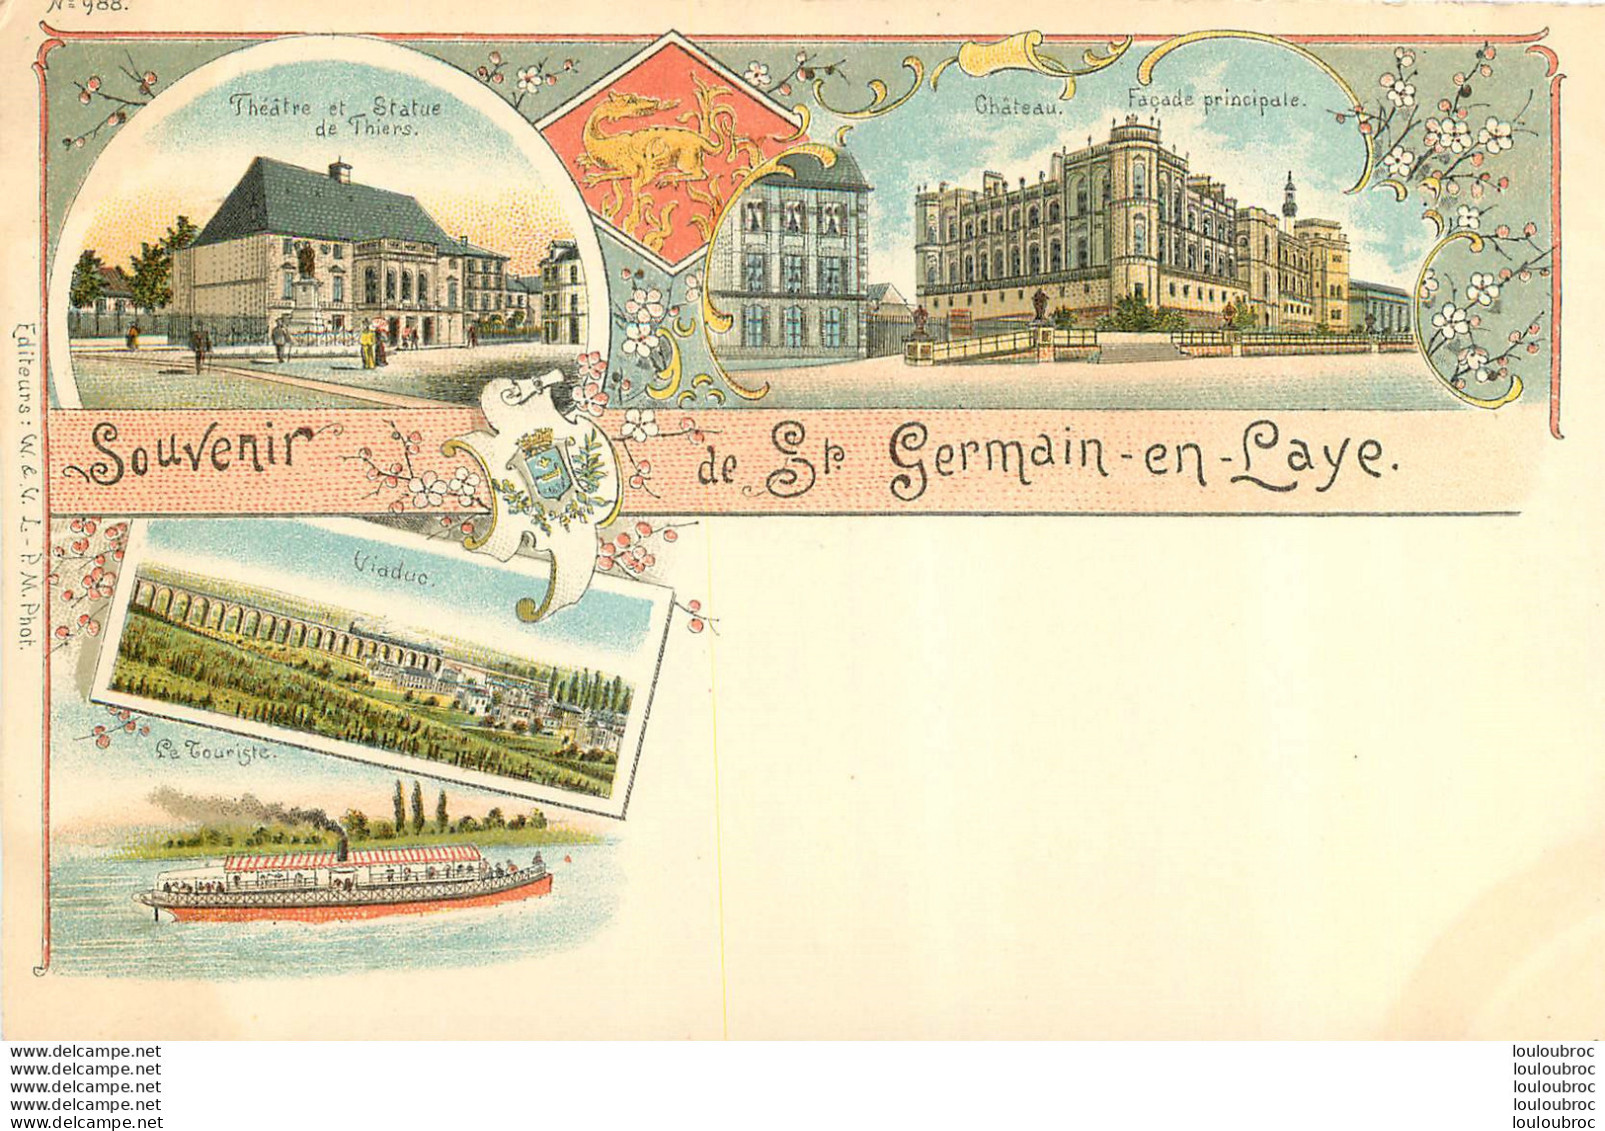 SAINT GERMAIN EN LAYE SOUVENIR EDITION W ET V.L. - St. Germain En Laye (Castillo)